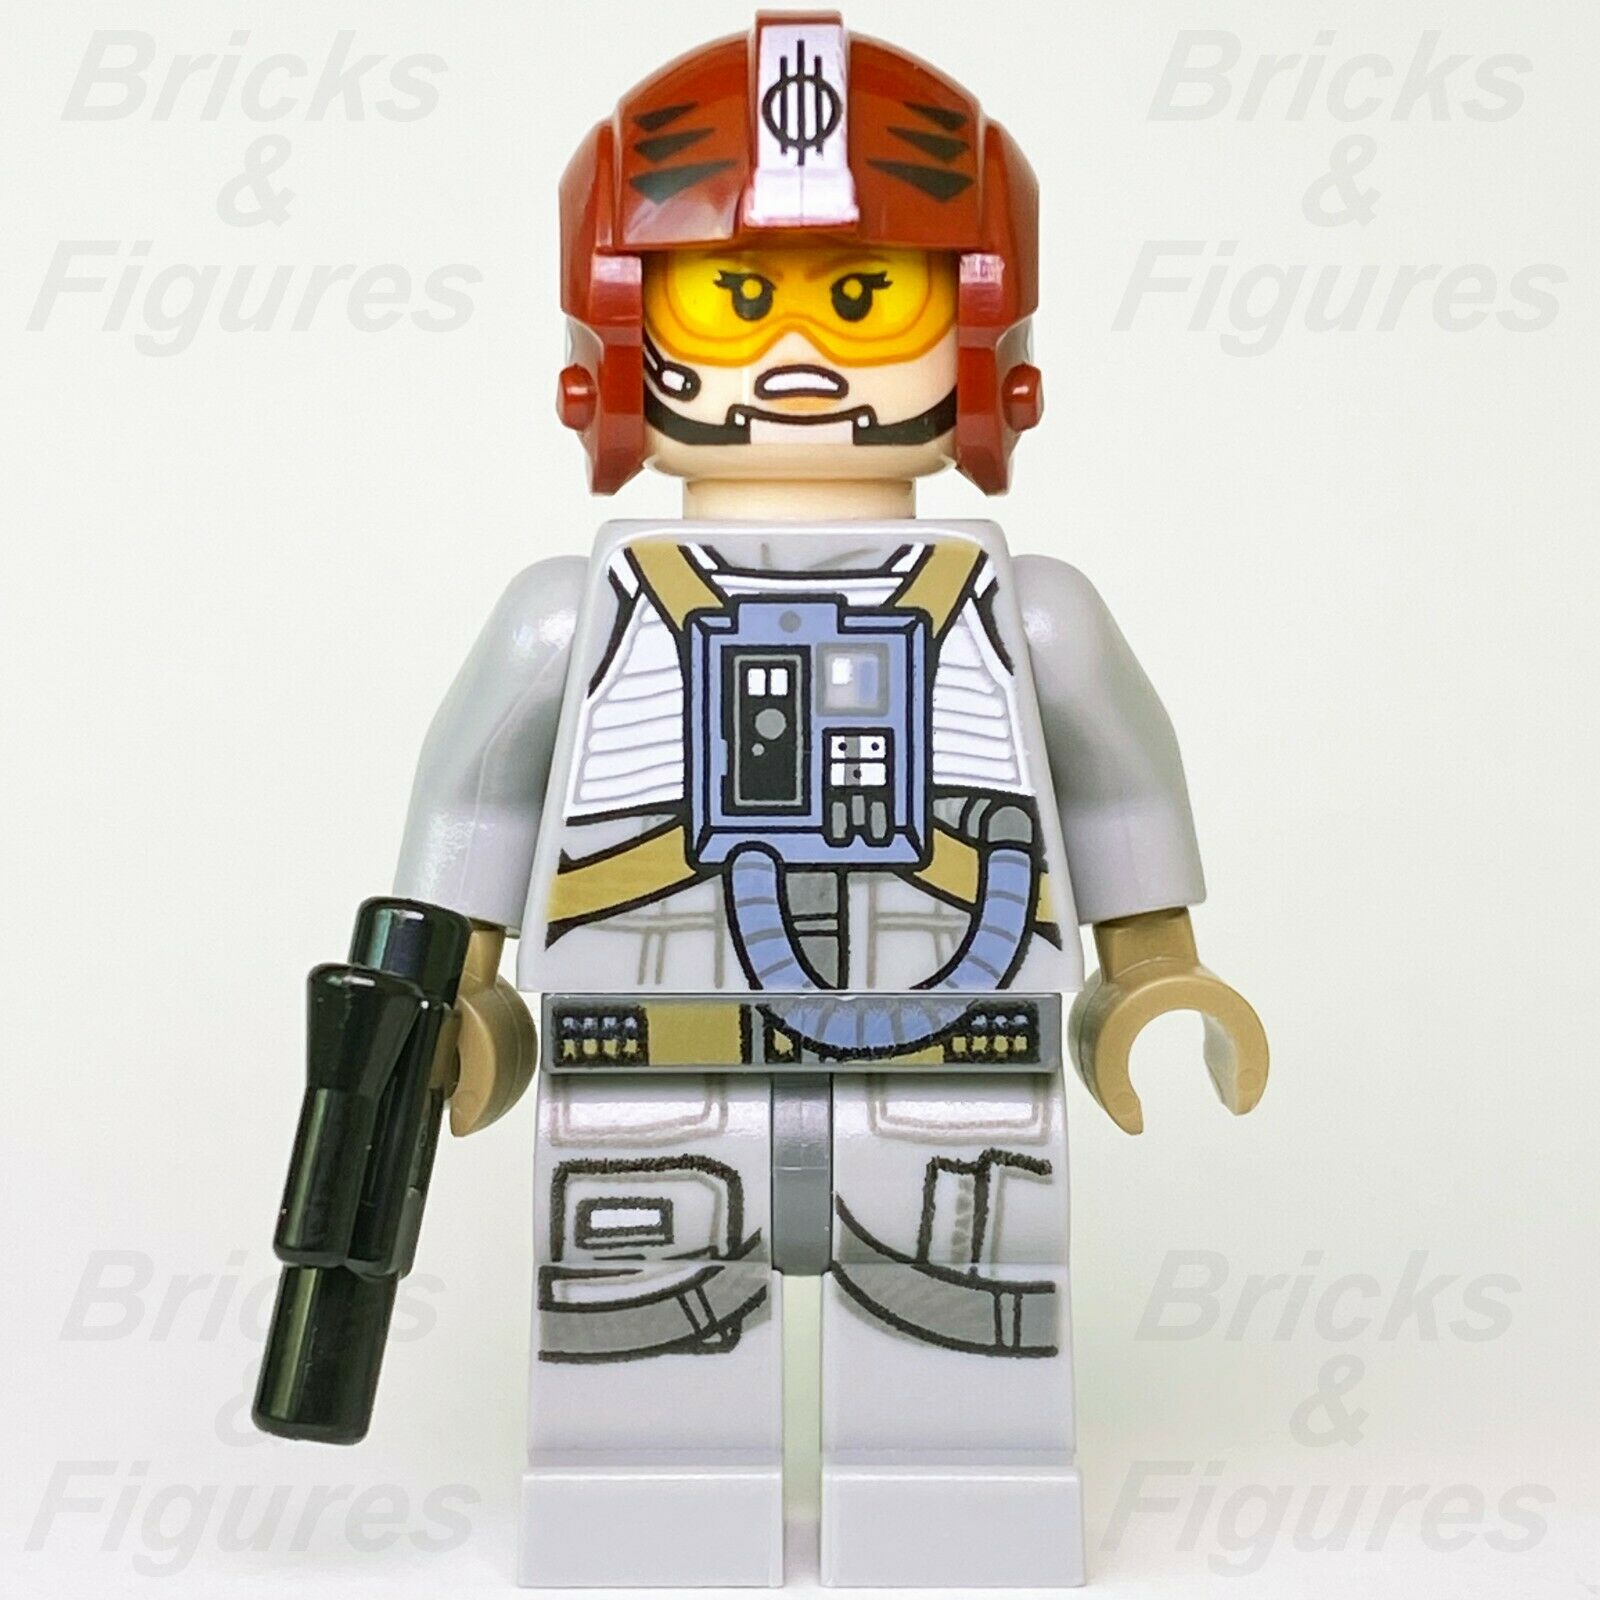 New Star Wars LEGO Sandspeeder Pilot Rebel Alliance Fighter Minifigure 75204 - Bricks & Figures